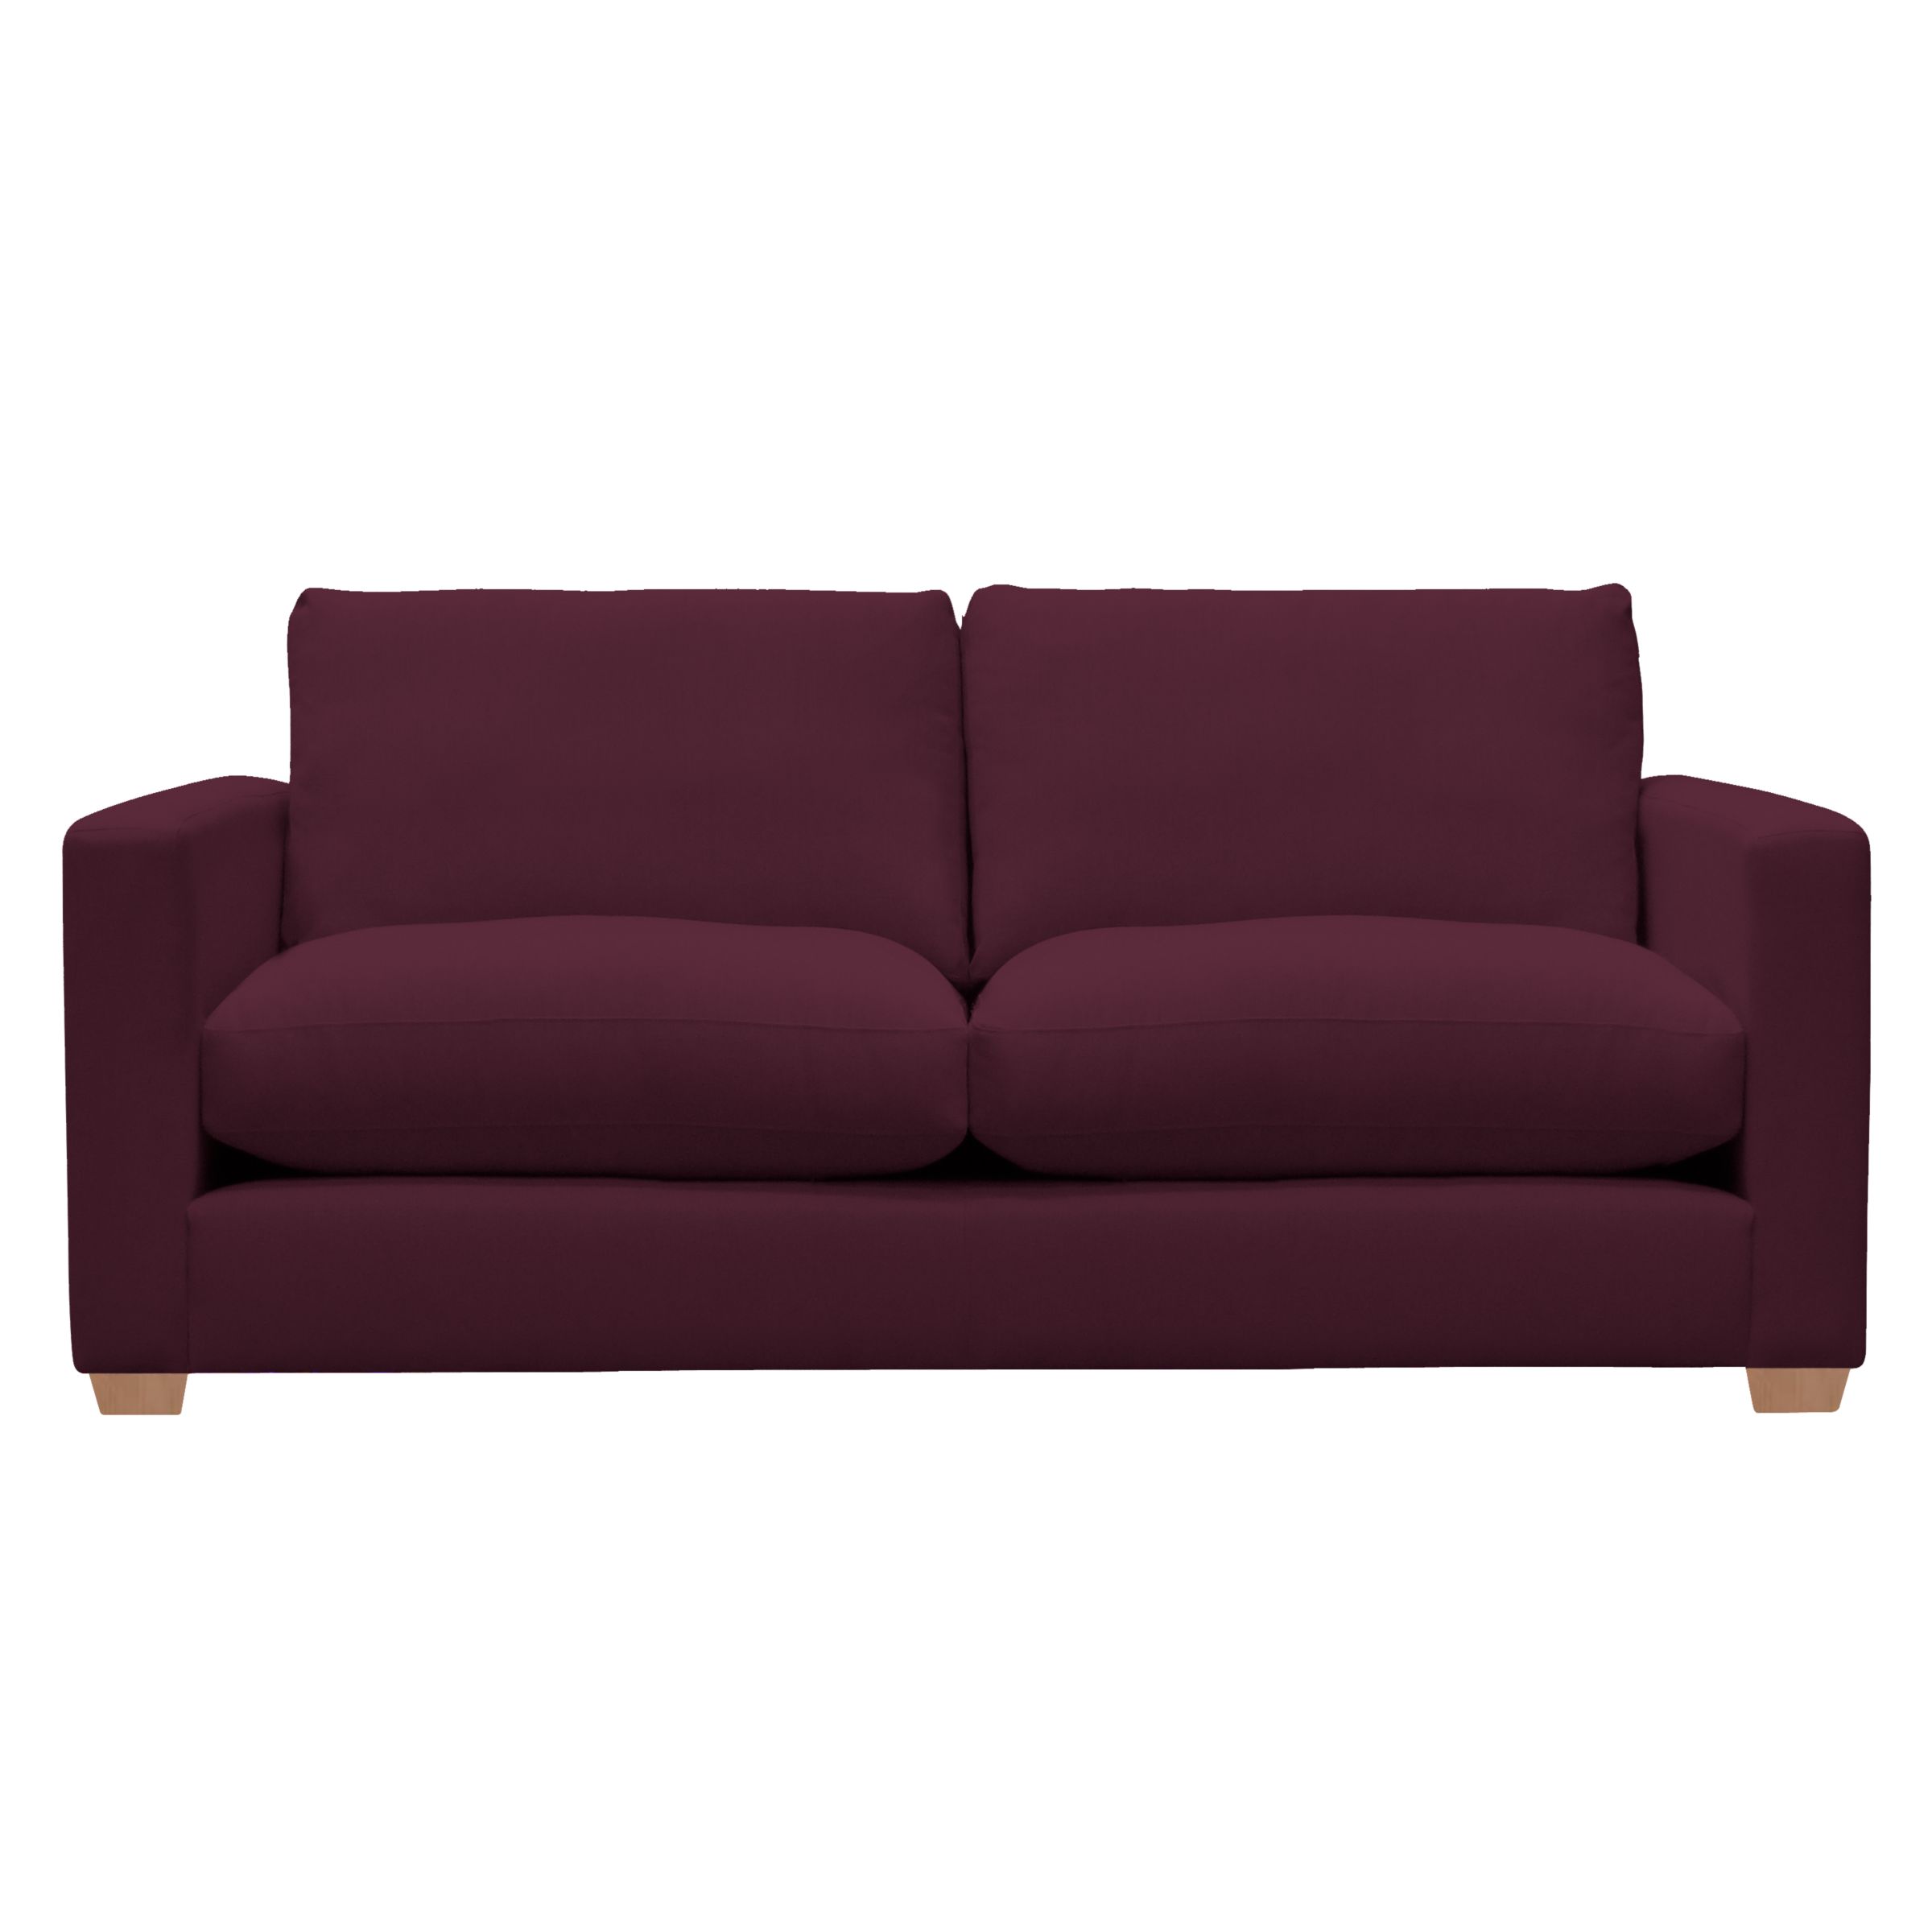 John Lewis Options Slim Arm Large Sofa, Eaton Cassis, width 200cm